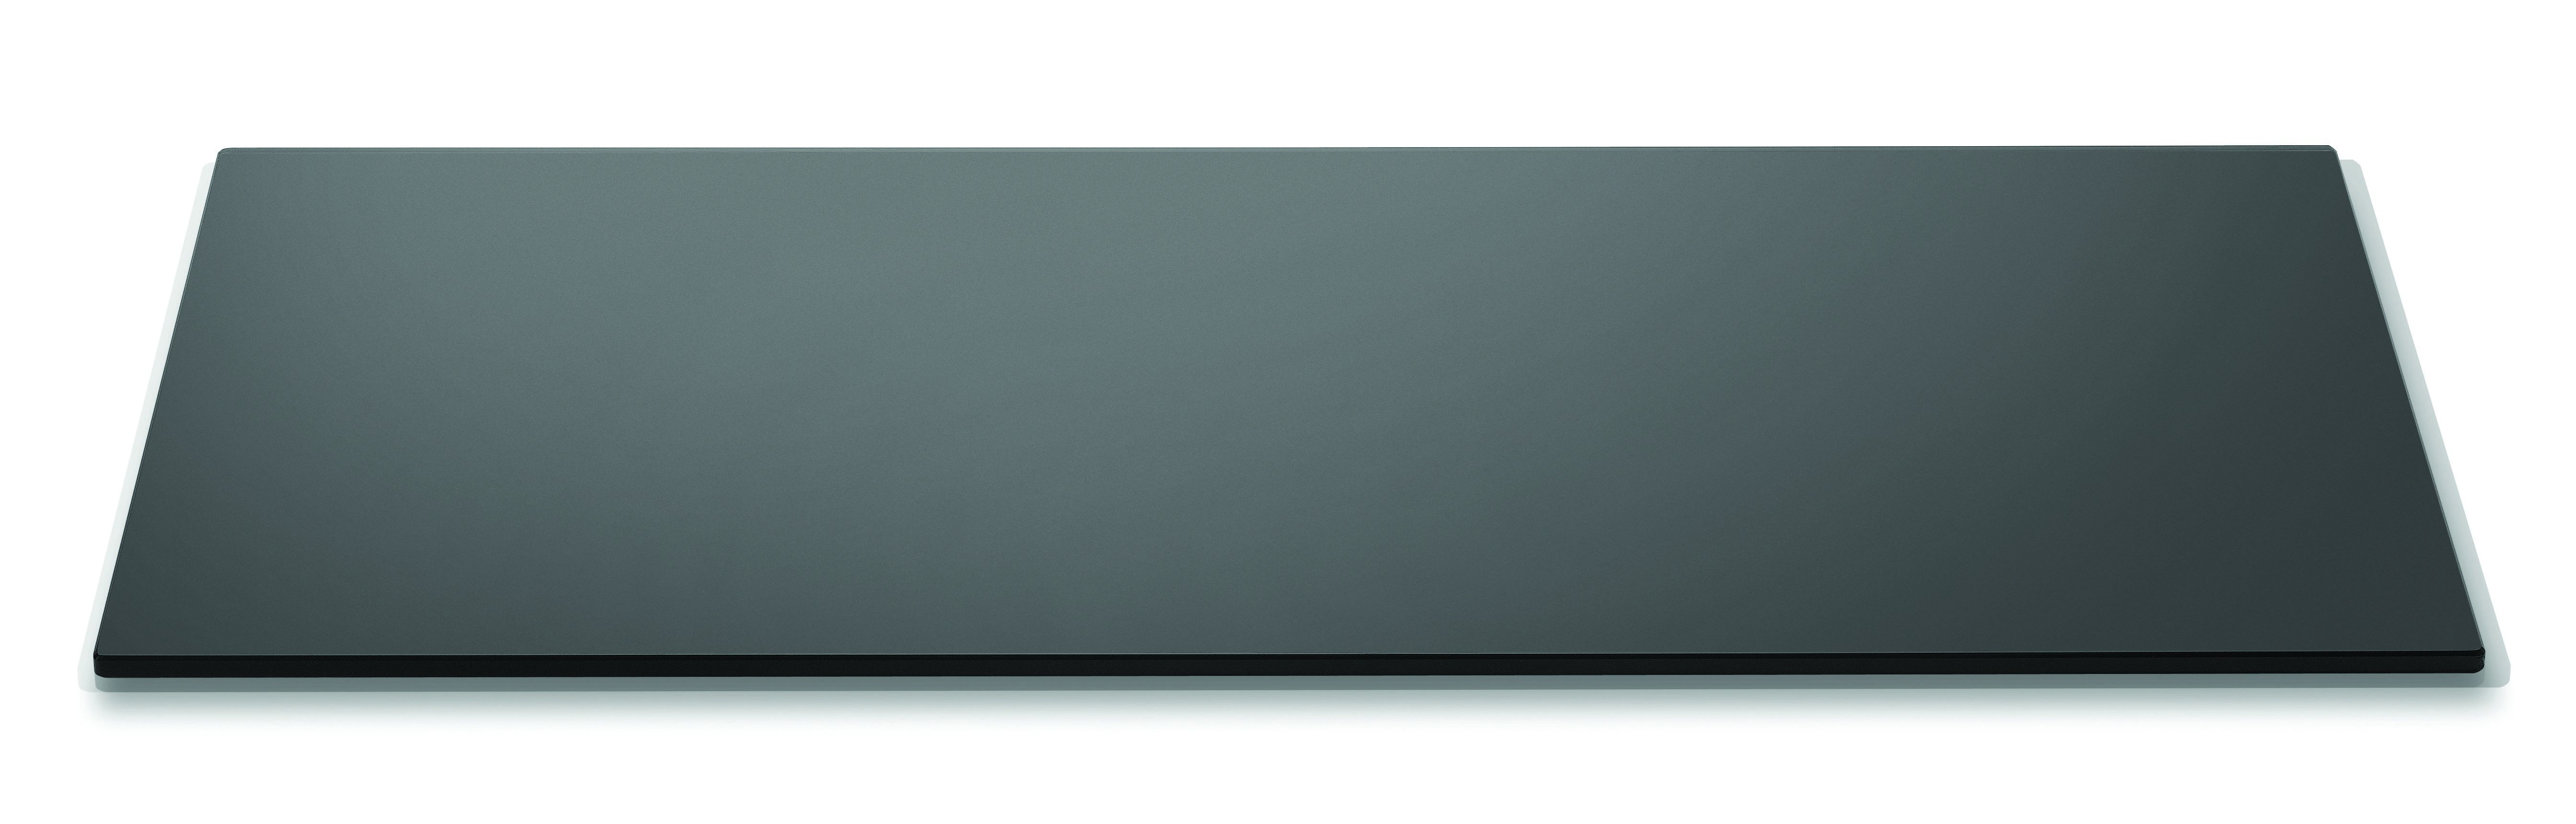 Rosseto SG003 Wide Rectangular Black Tempered Glass Surface 33.5" x 14"